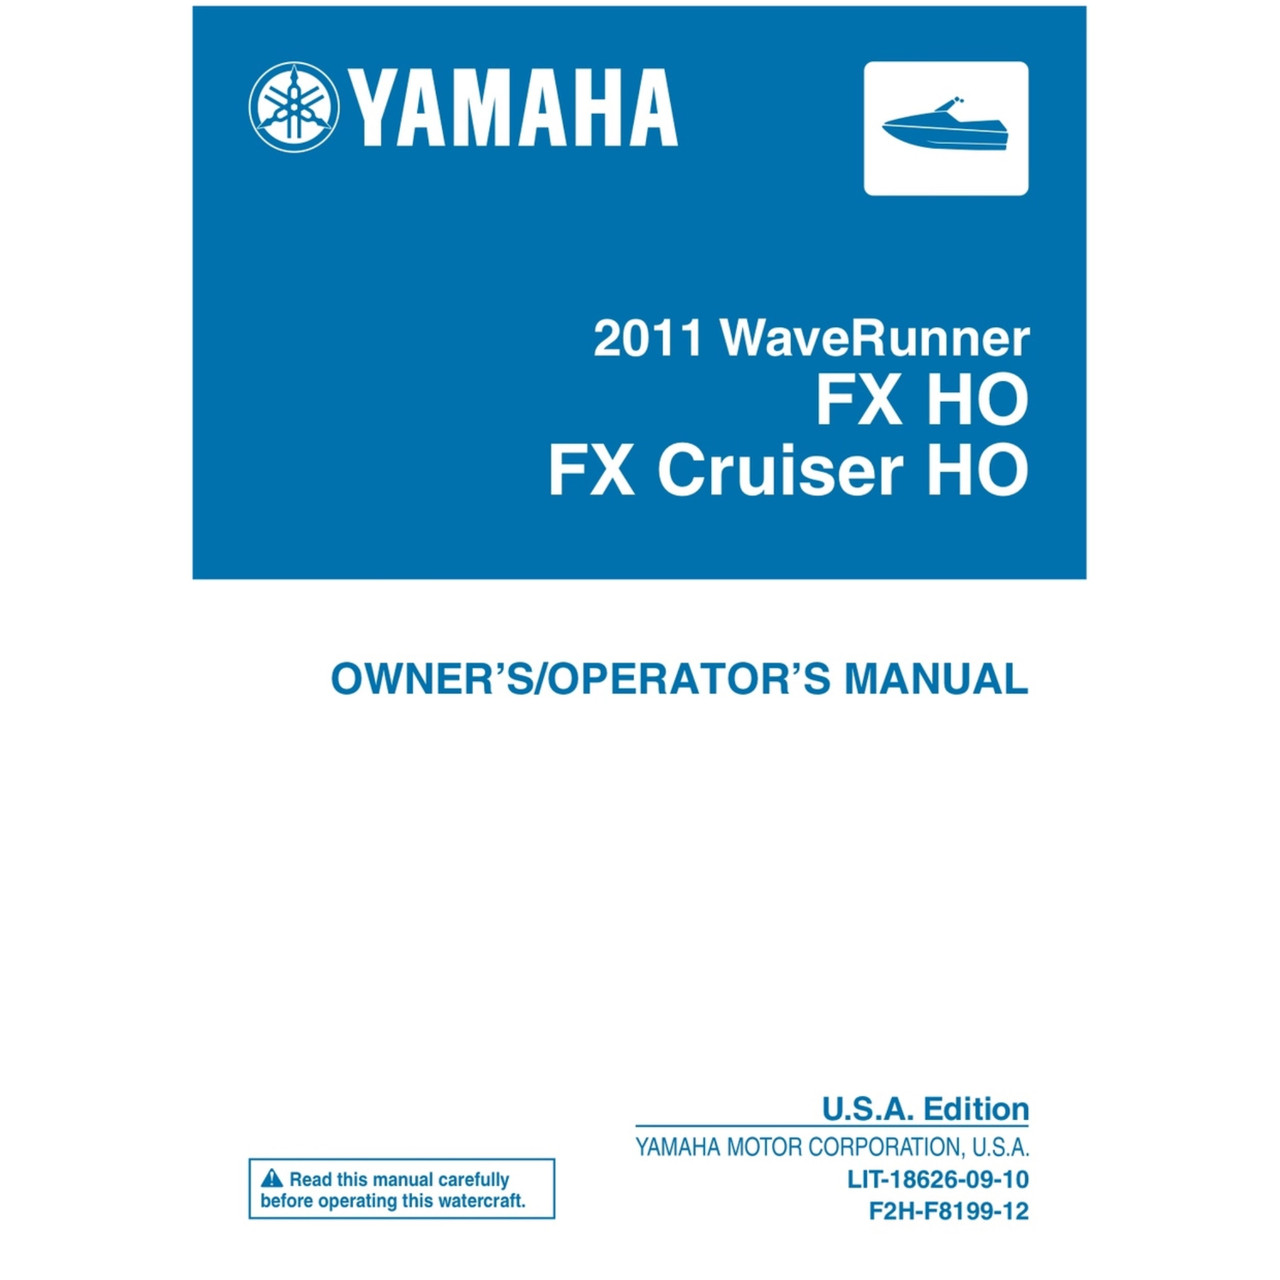 Yamaha New OEM 2011 WaveRunner FX HO/Cruiser HO Owners Manual, LIT-18626-09-10